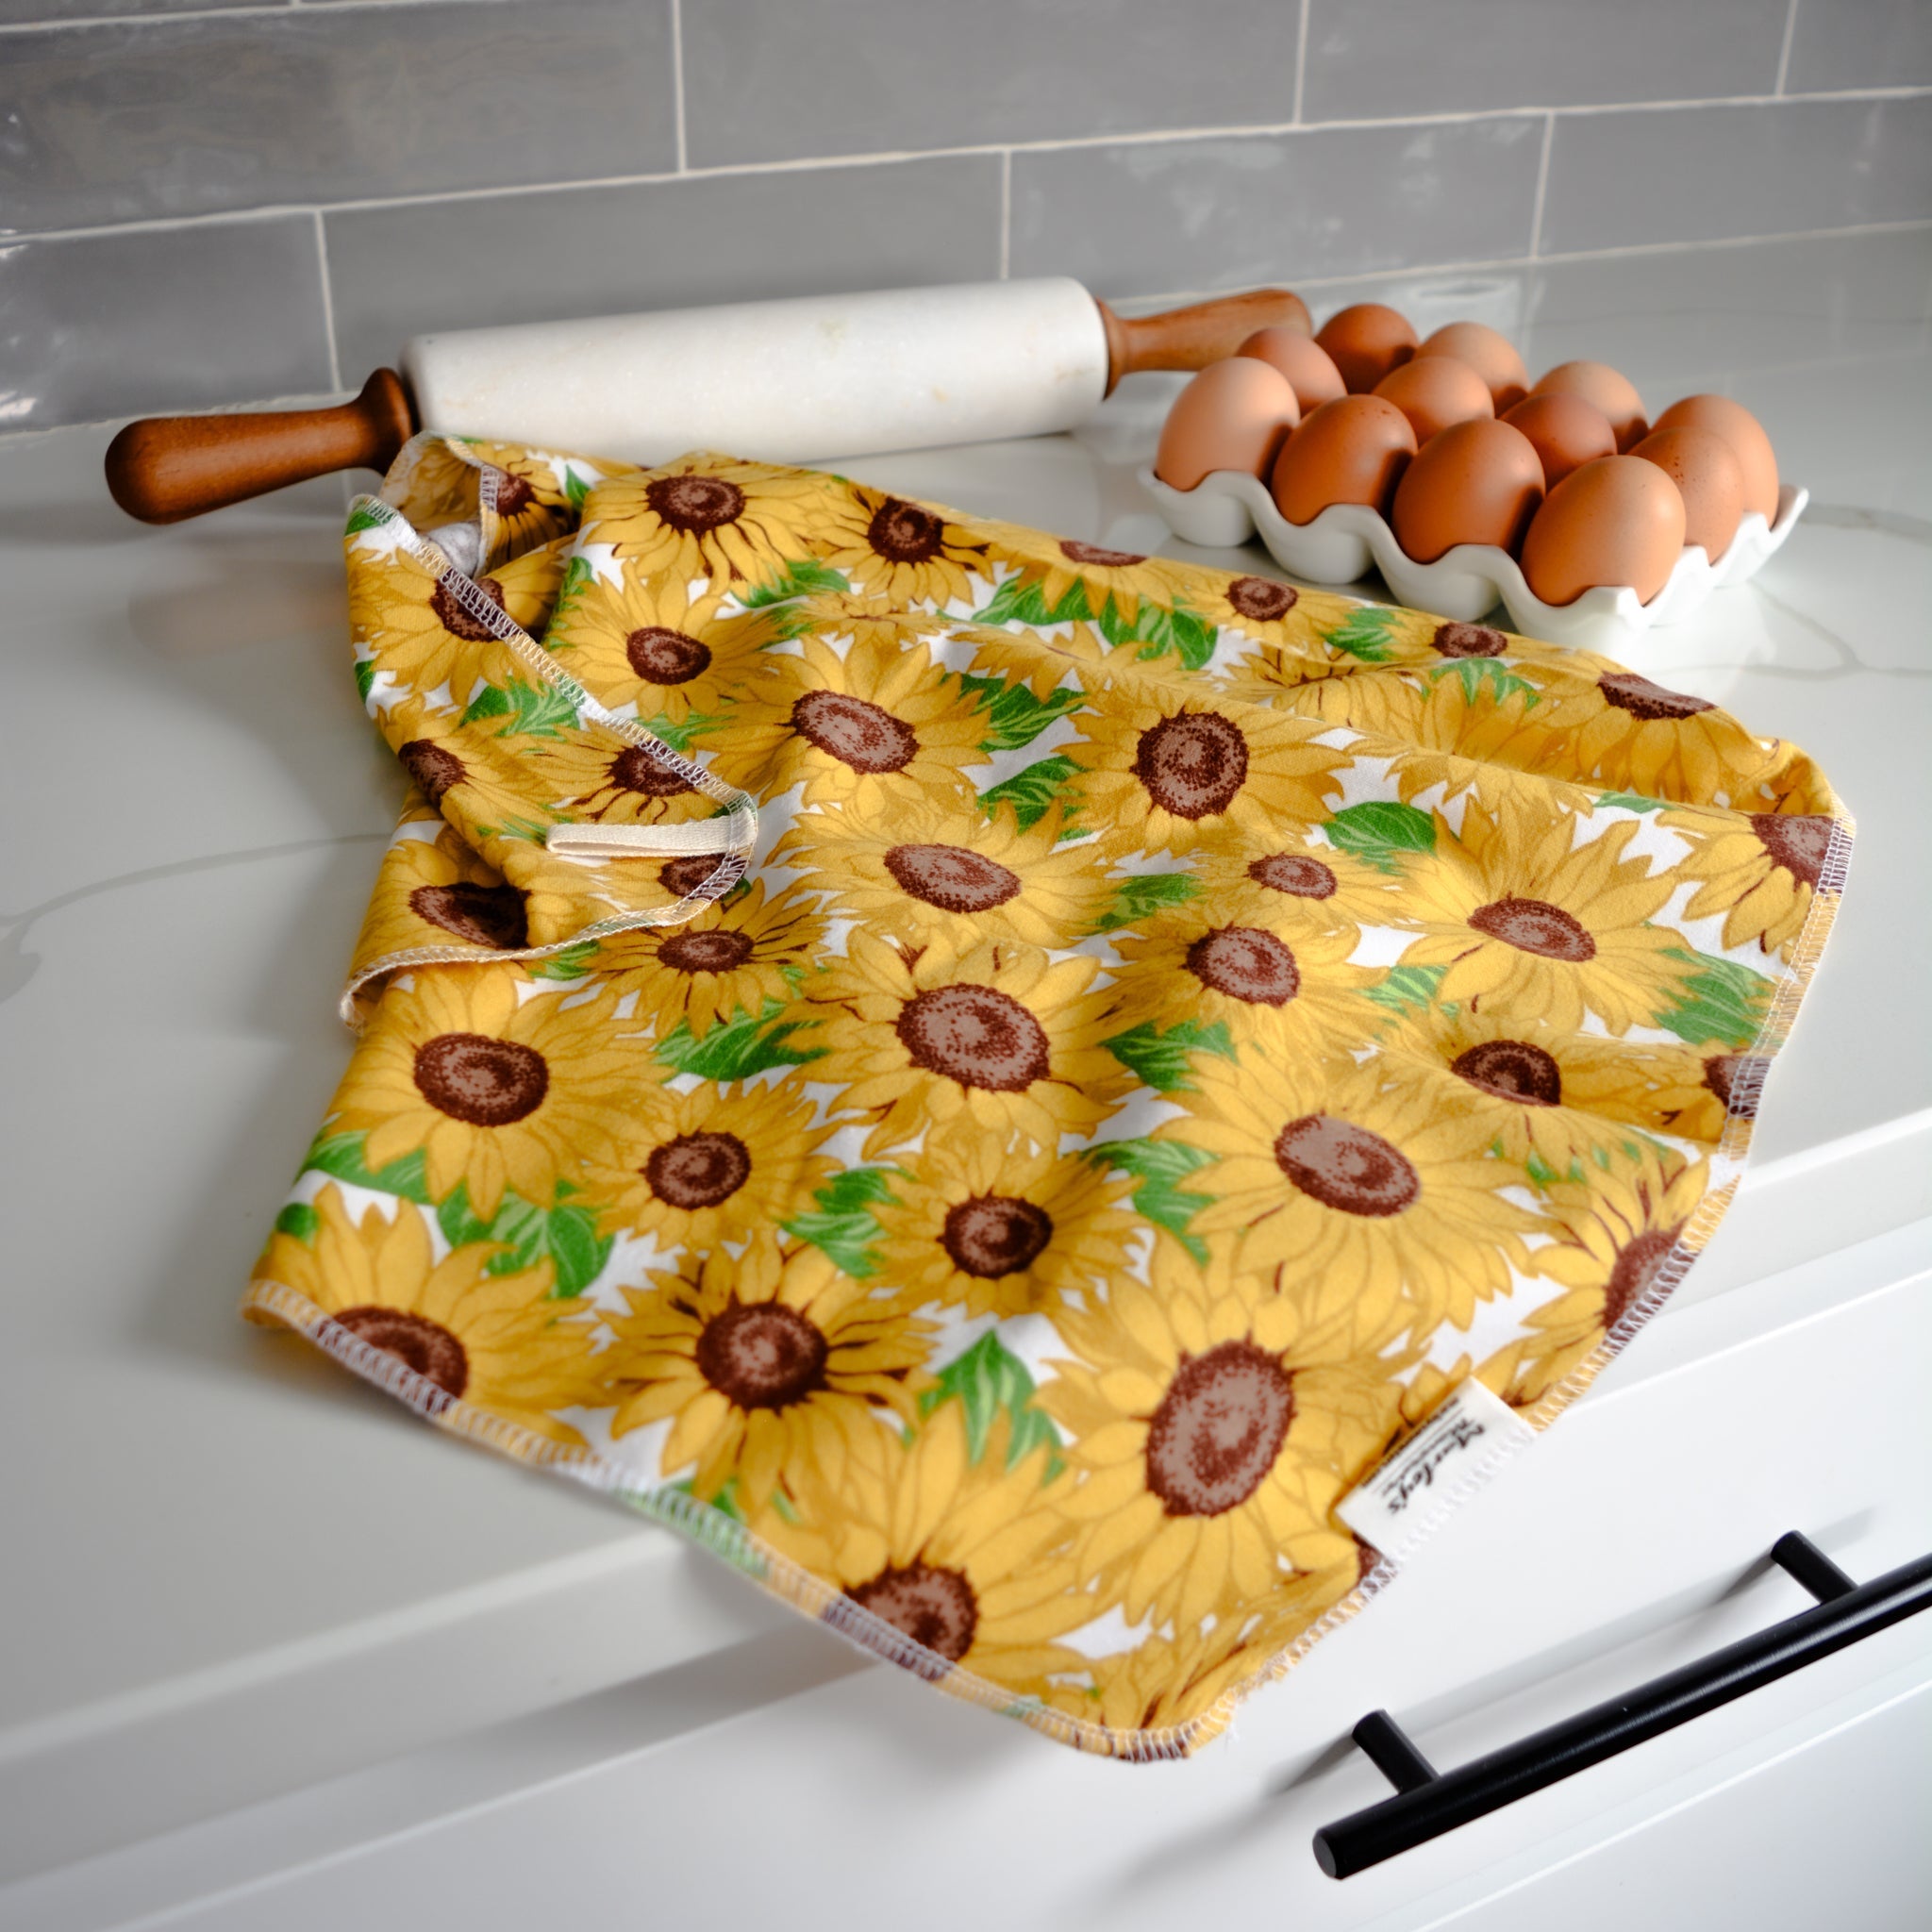 Kitchen Tea Towel: Fresh Prints - Marley's Monsters